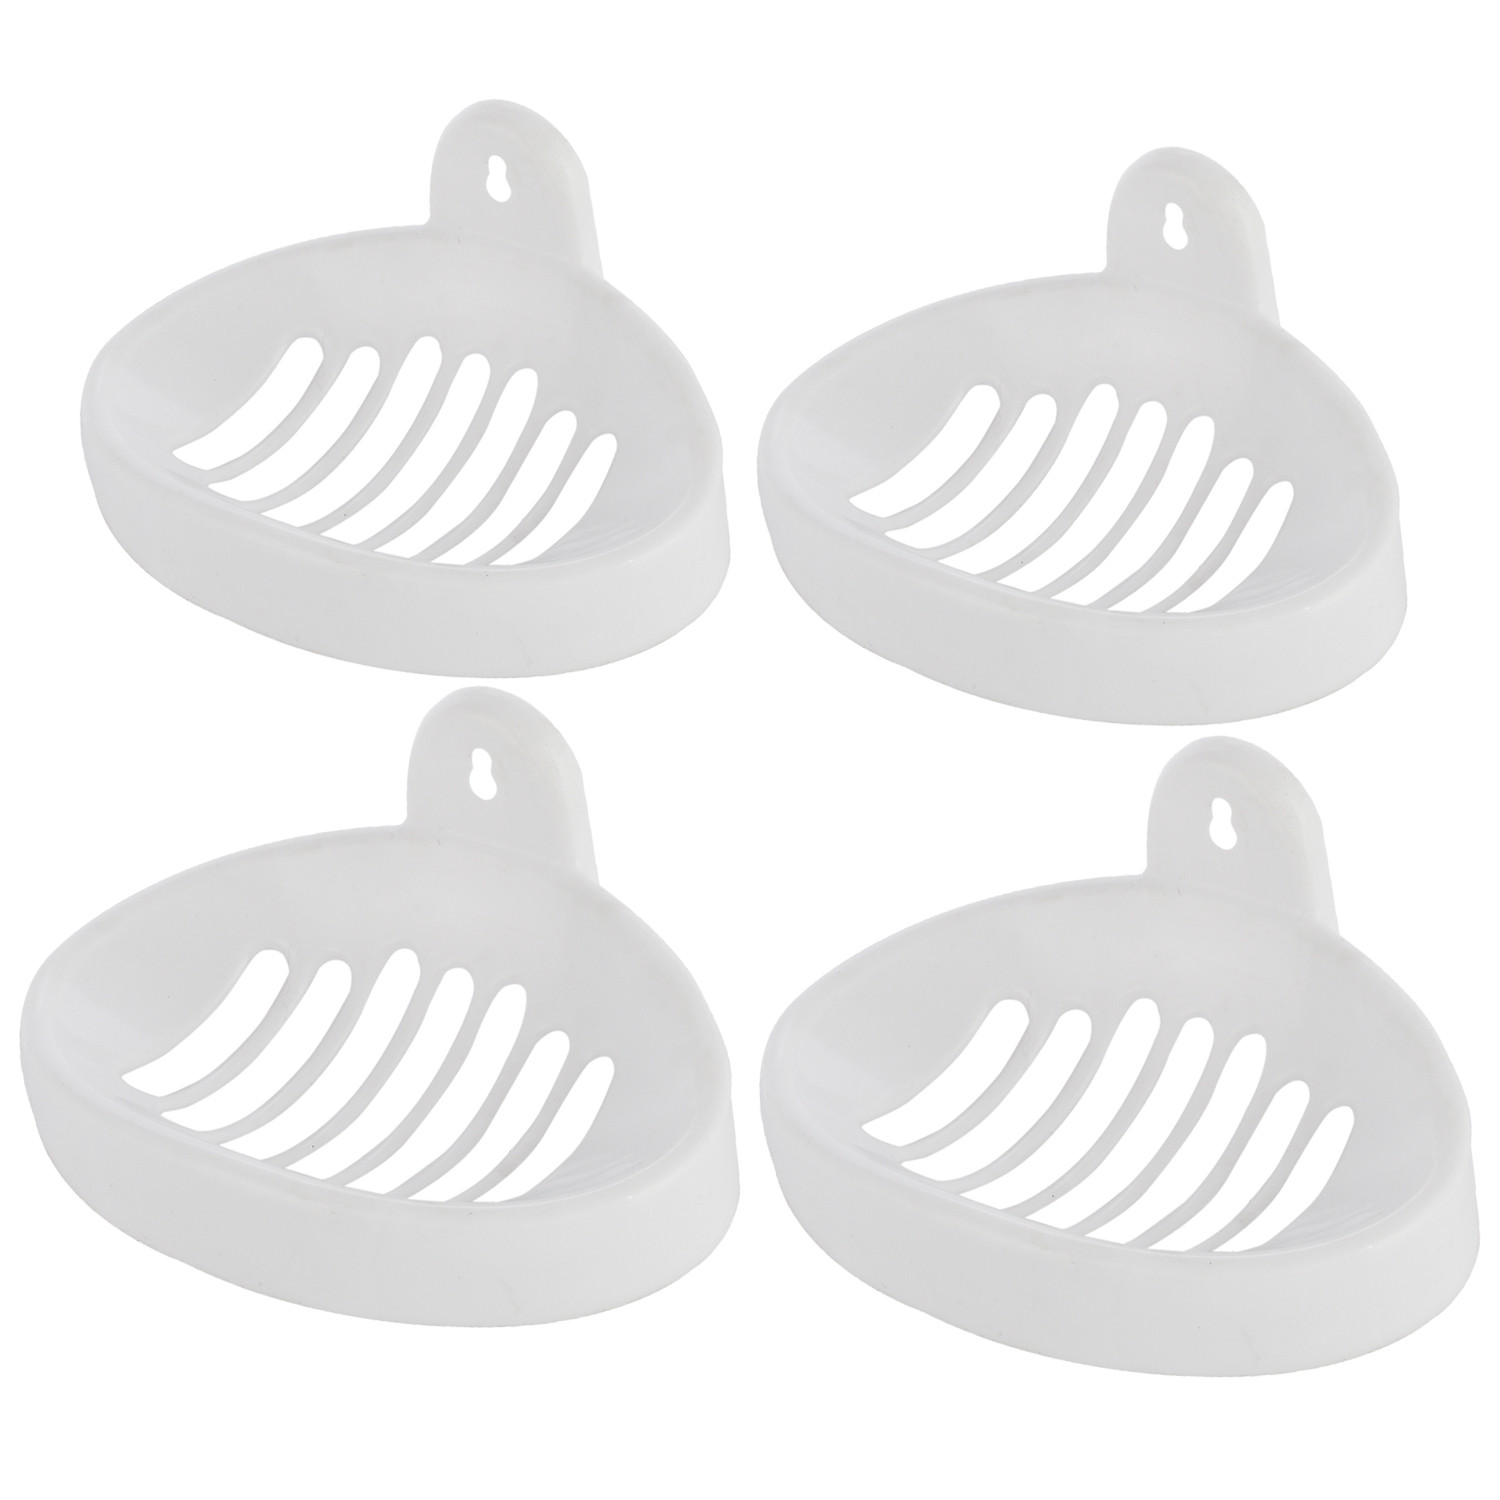 Kuber Industries Soap Holder|Sink Soap Holder|Plastic wall Mounted Soap Holder|Oval Shape Self Draining Soap Dish for Bathroom| (White)